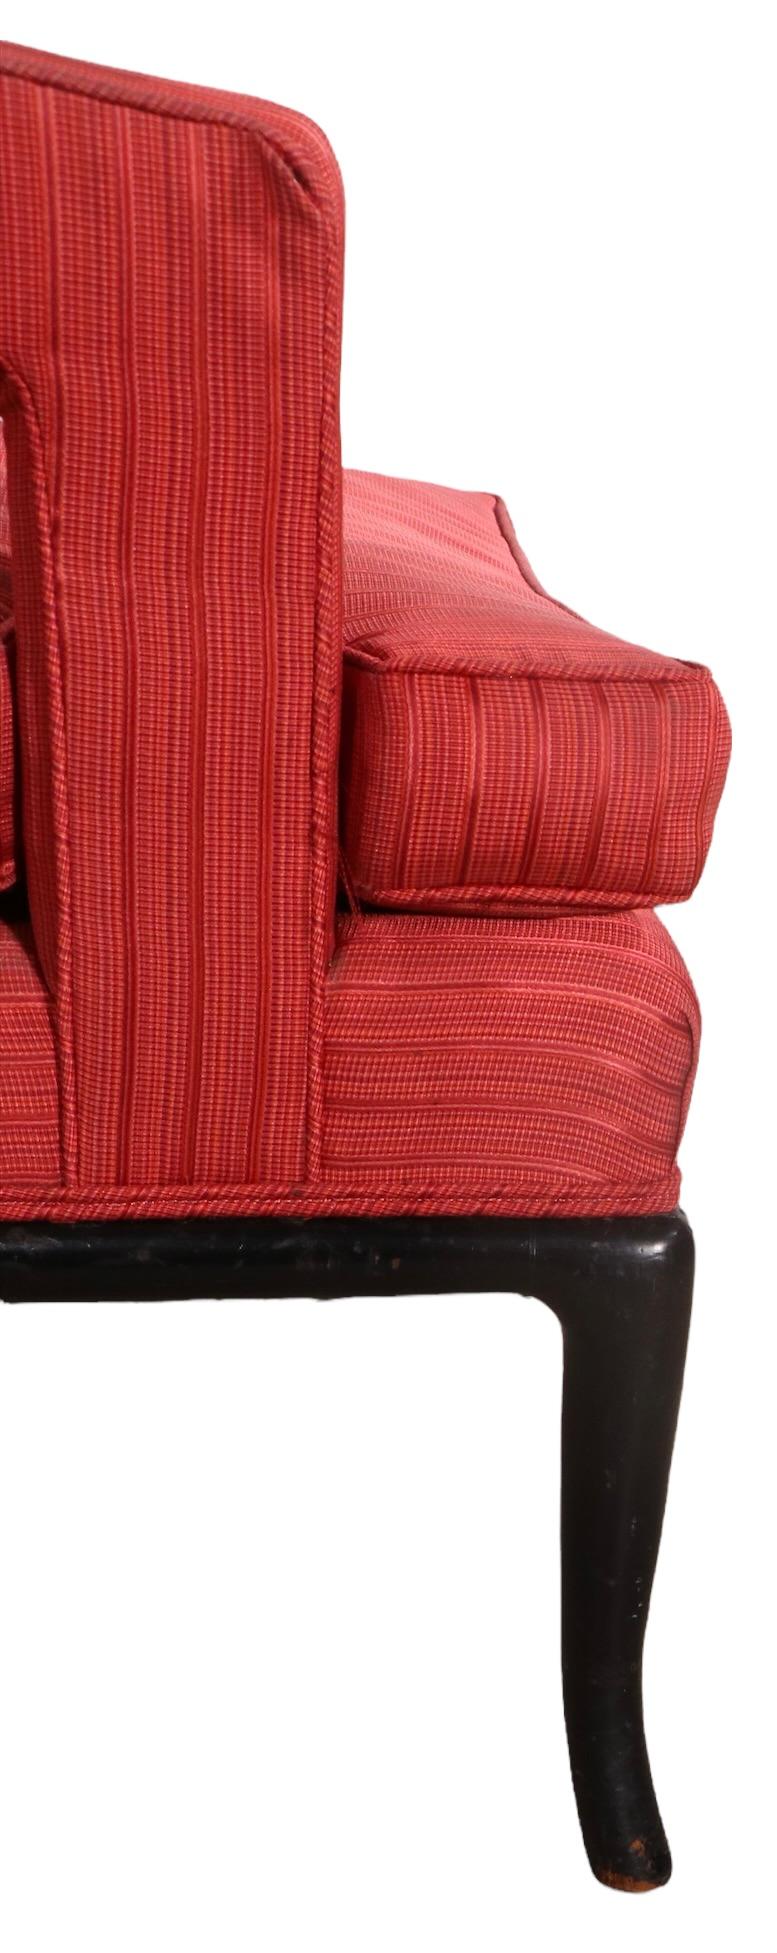 Robsjohn Gibbings Widdicomb Lounge Chair  For Sale 2